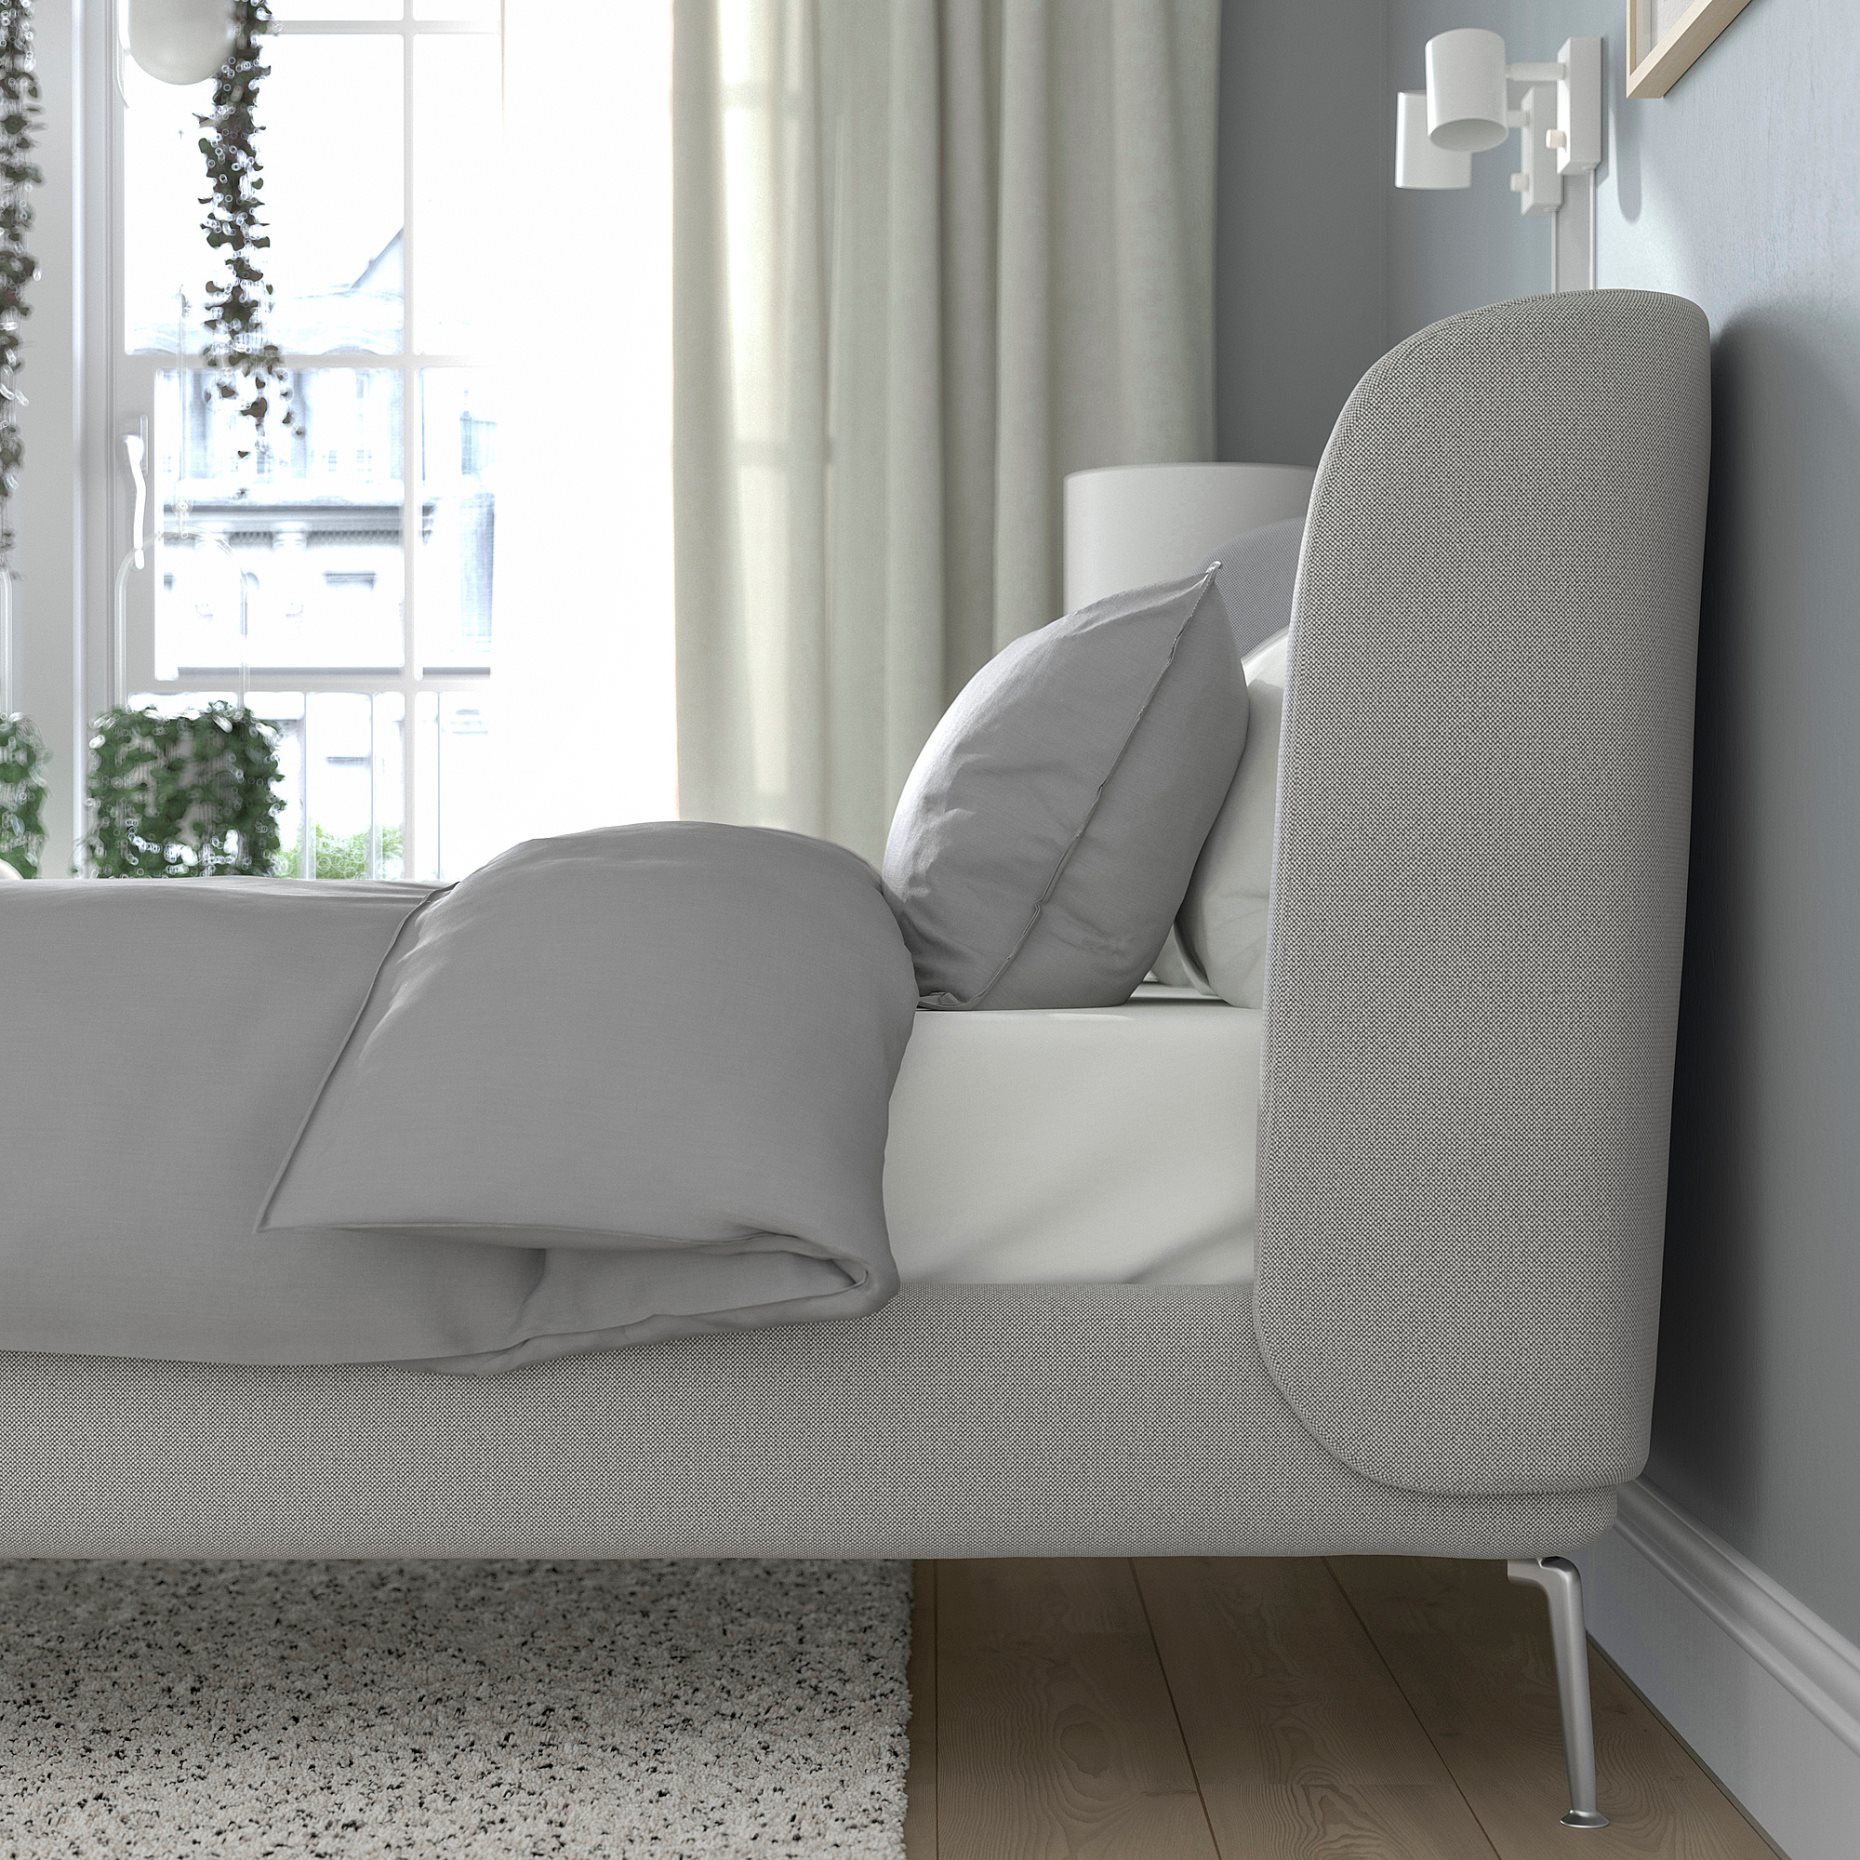 TUFJORD, κρεβάτι με επένδυση, 140x200 cm, 495.553.19